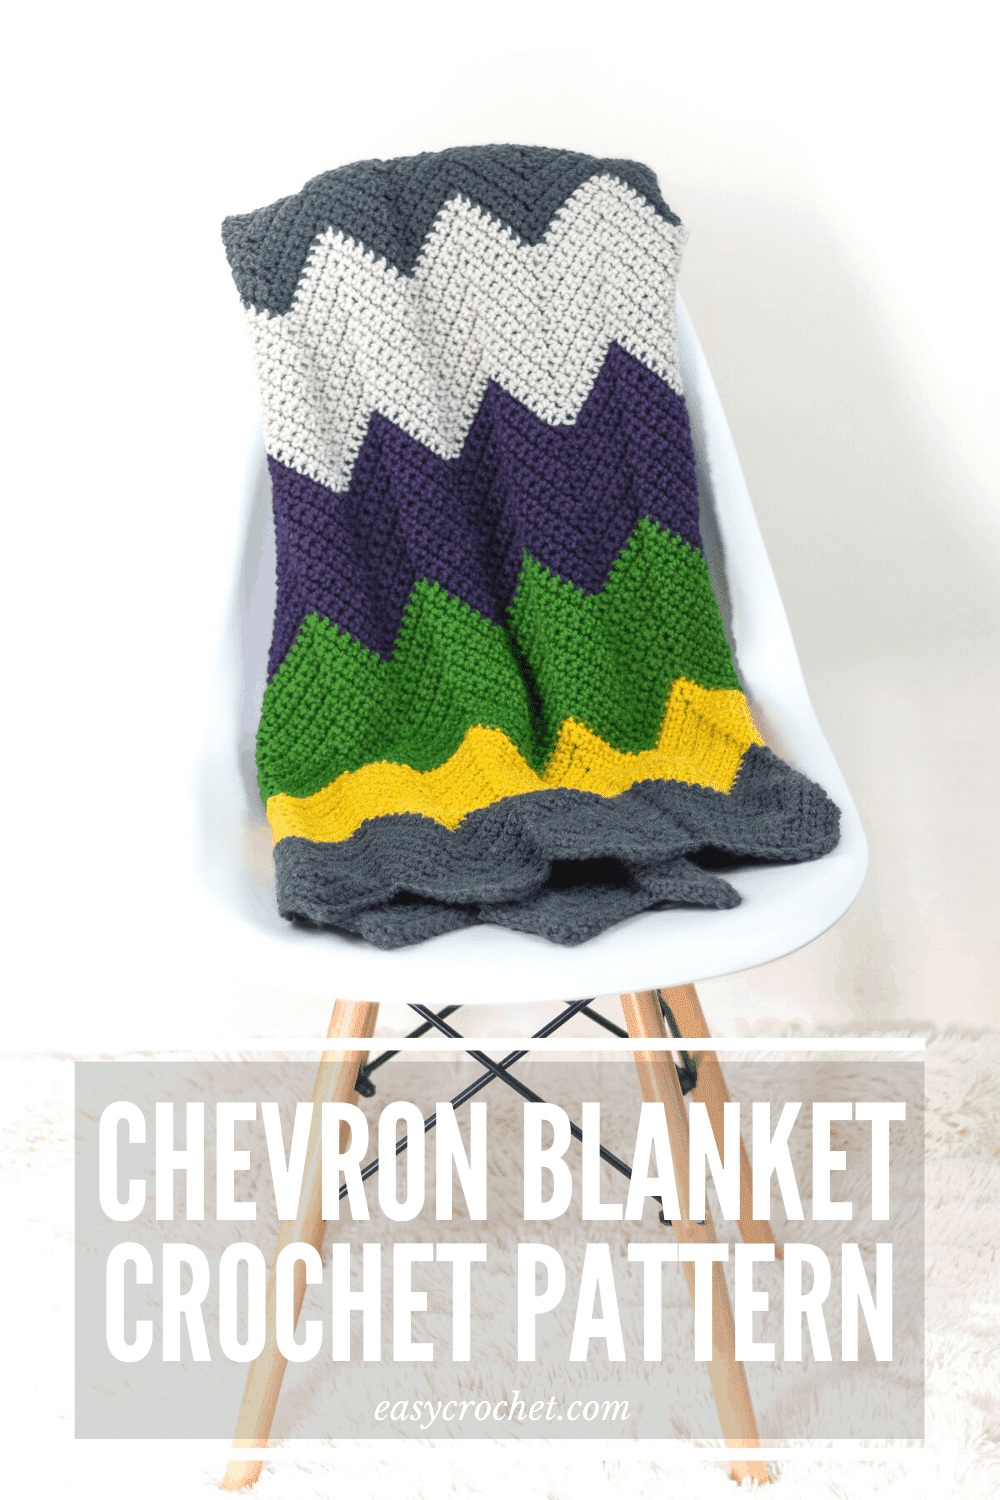 Free chevron crochet blanket pattern using bright and bold colors! Free crochet pattern from Easy Crochet via @easycrochetcom